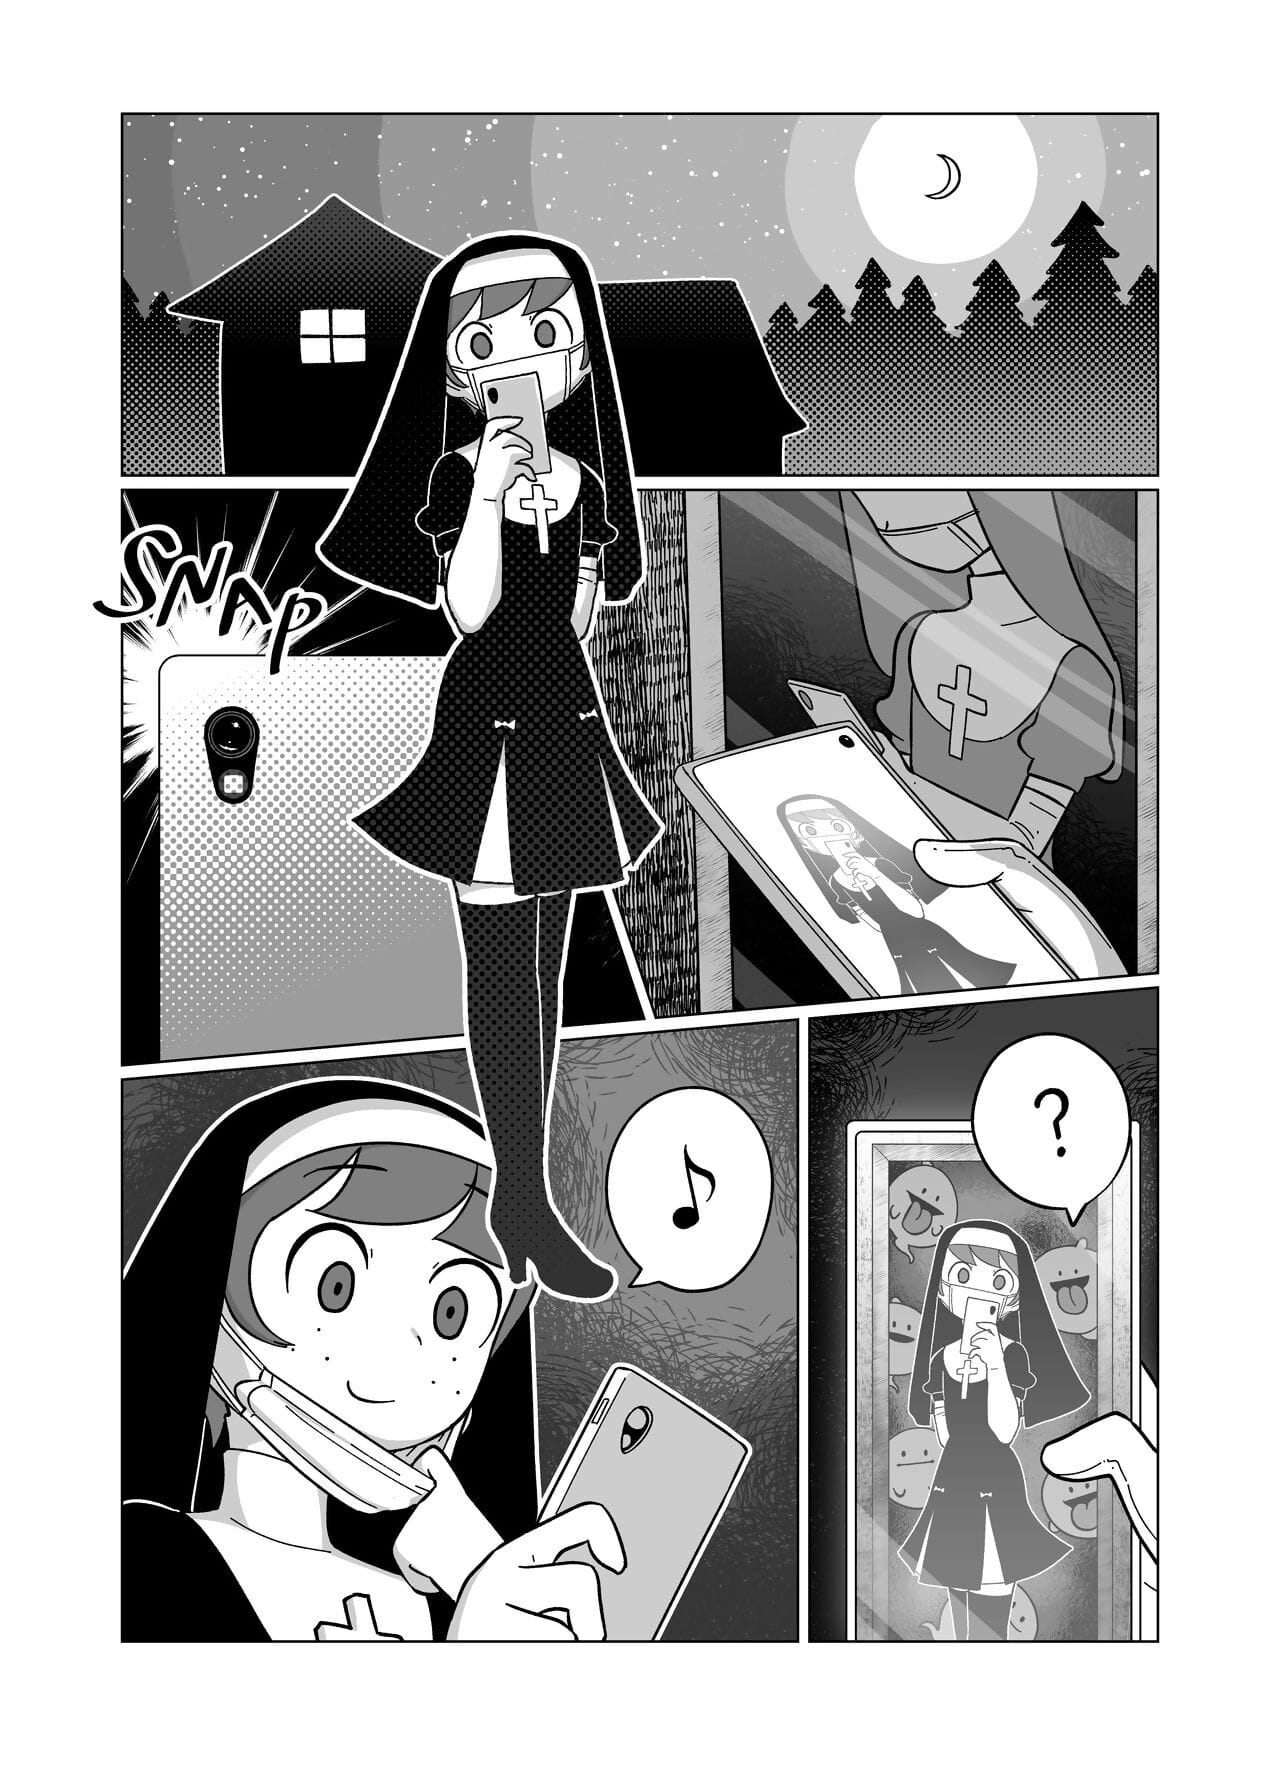 Marina i fuj combo Komiks page 1